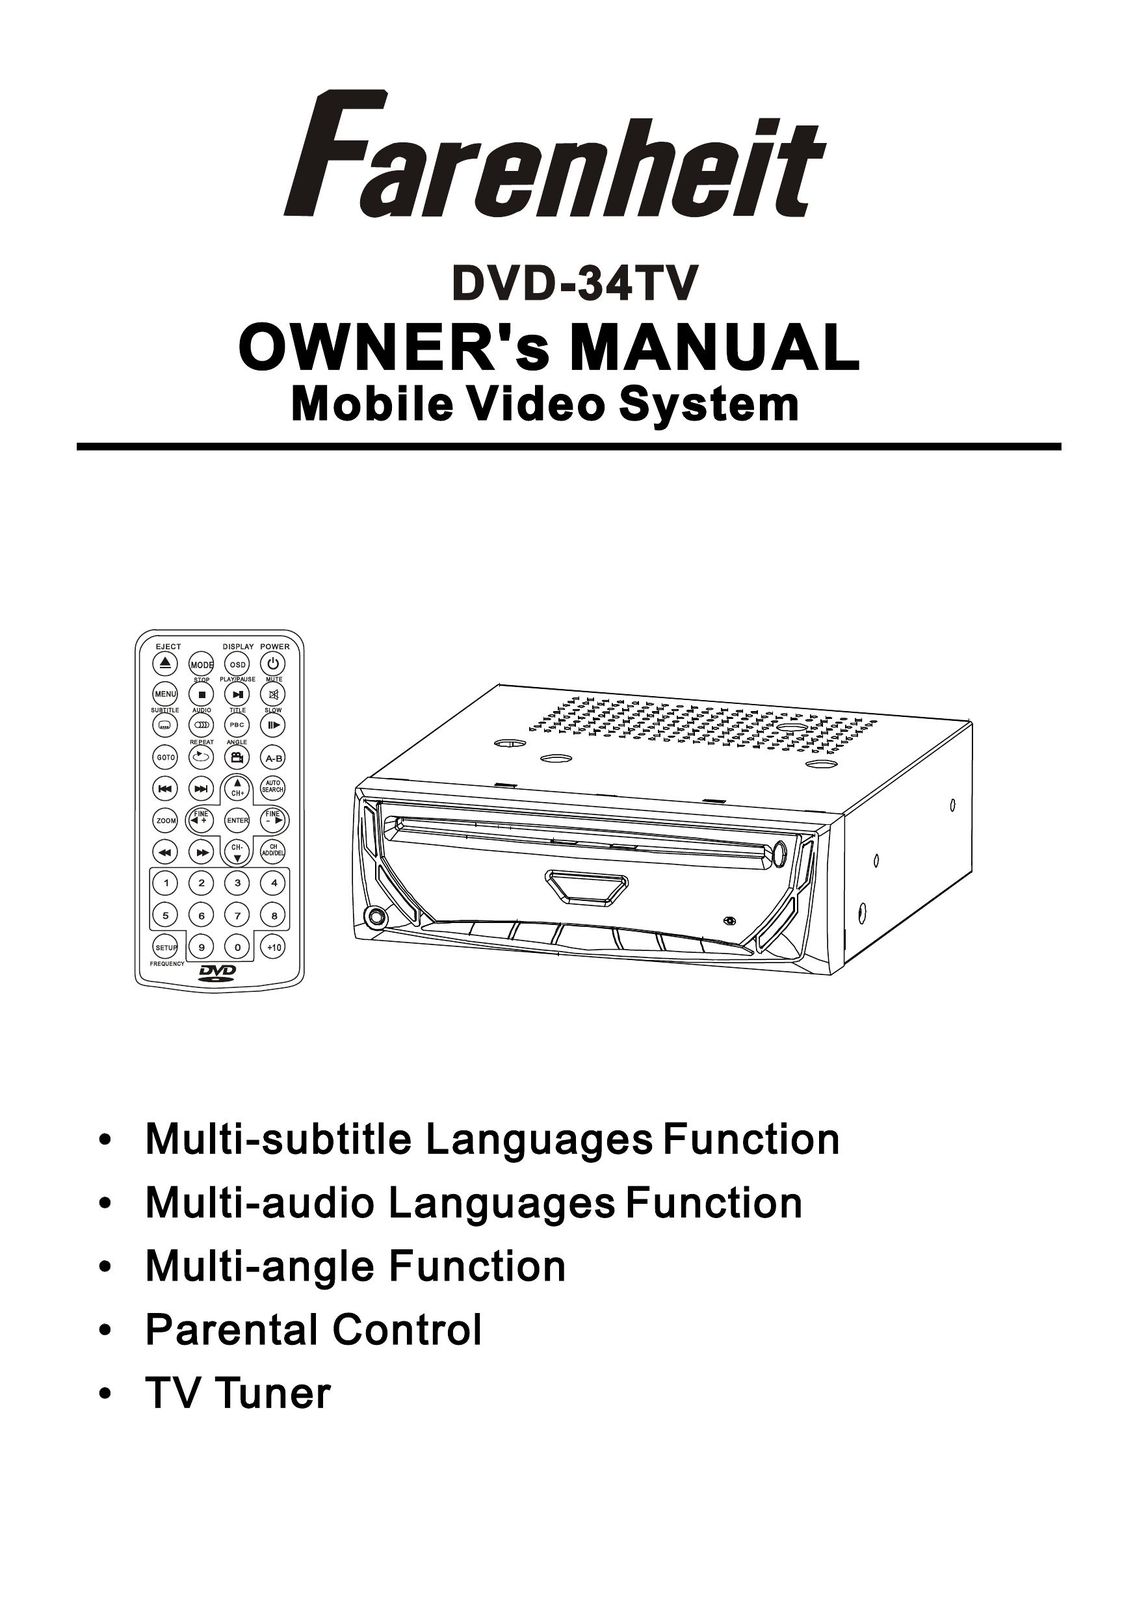 Farenheit Technologies DVD-34TV Car Video System User Manual